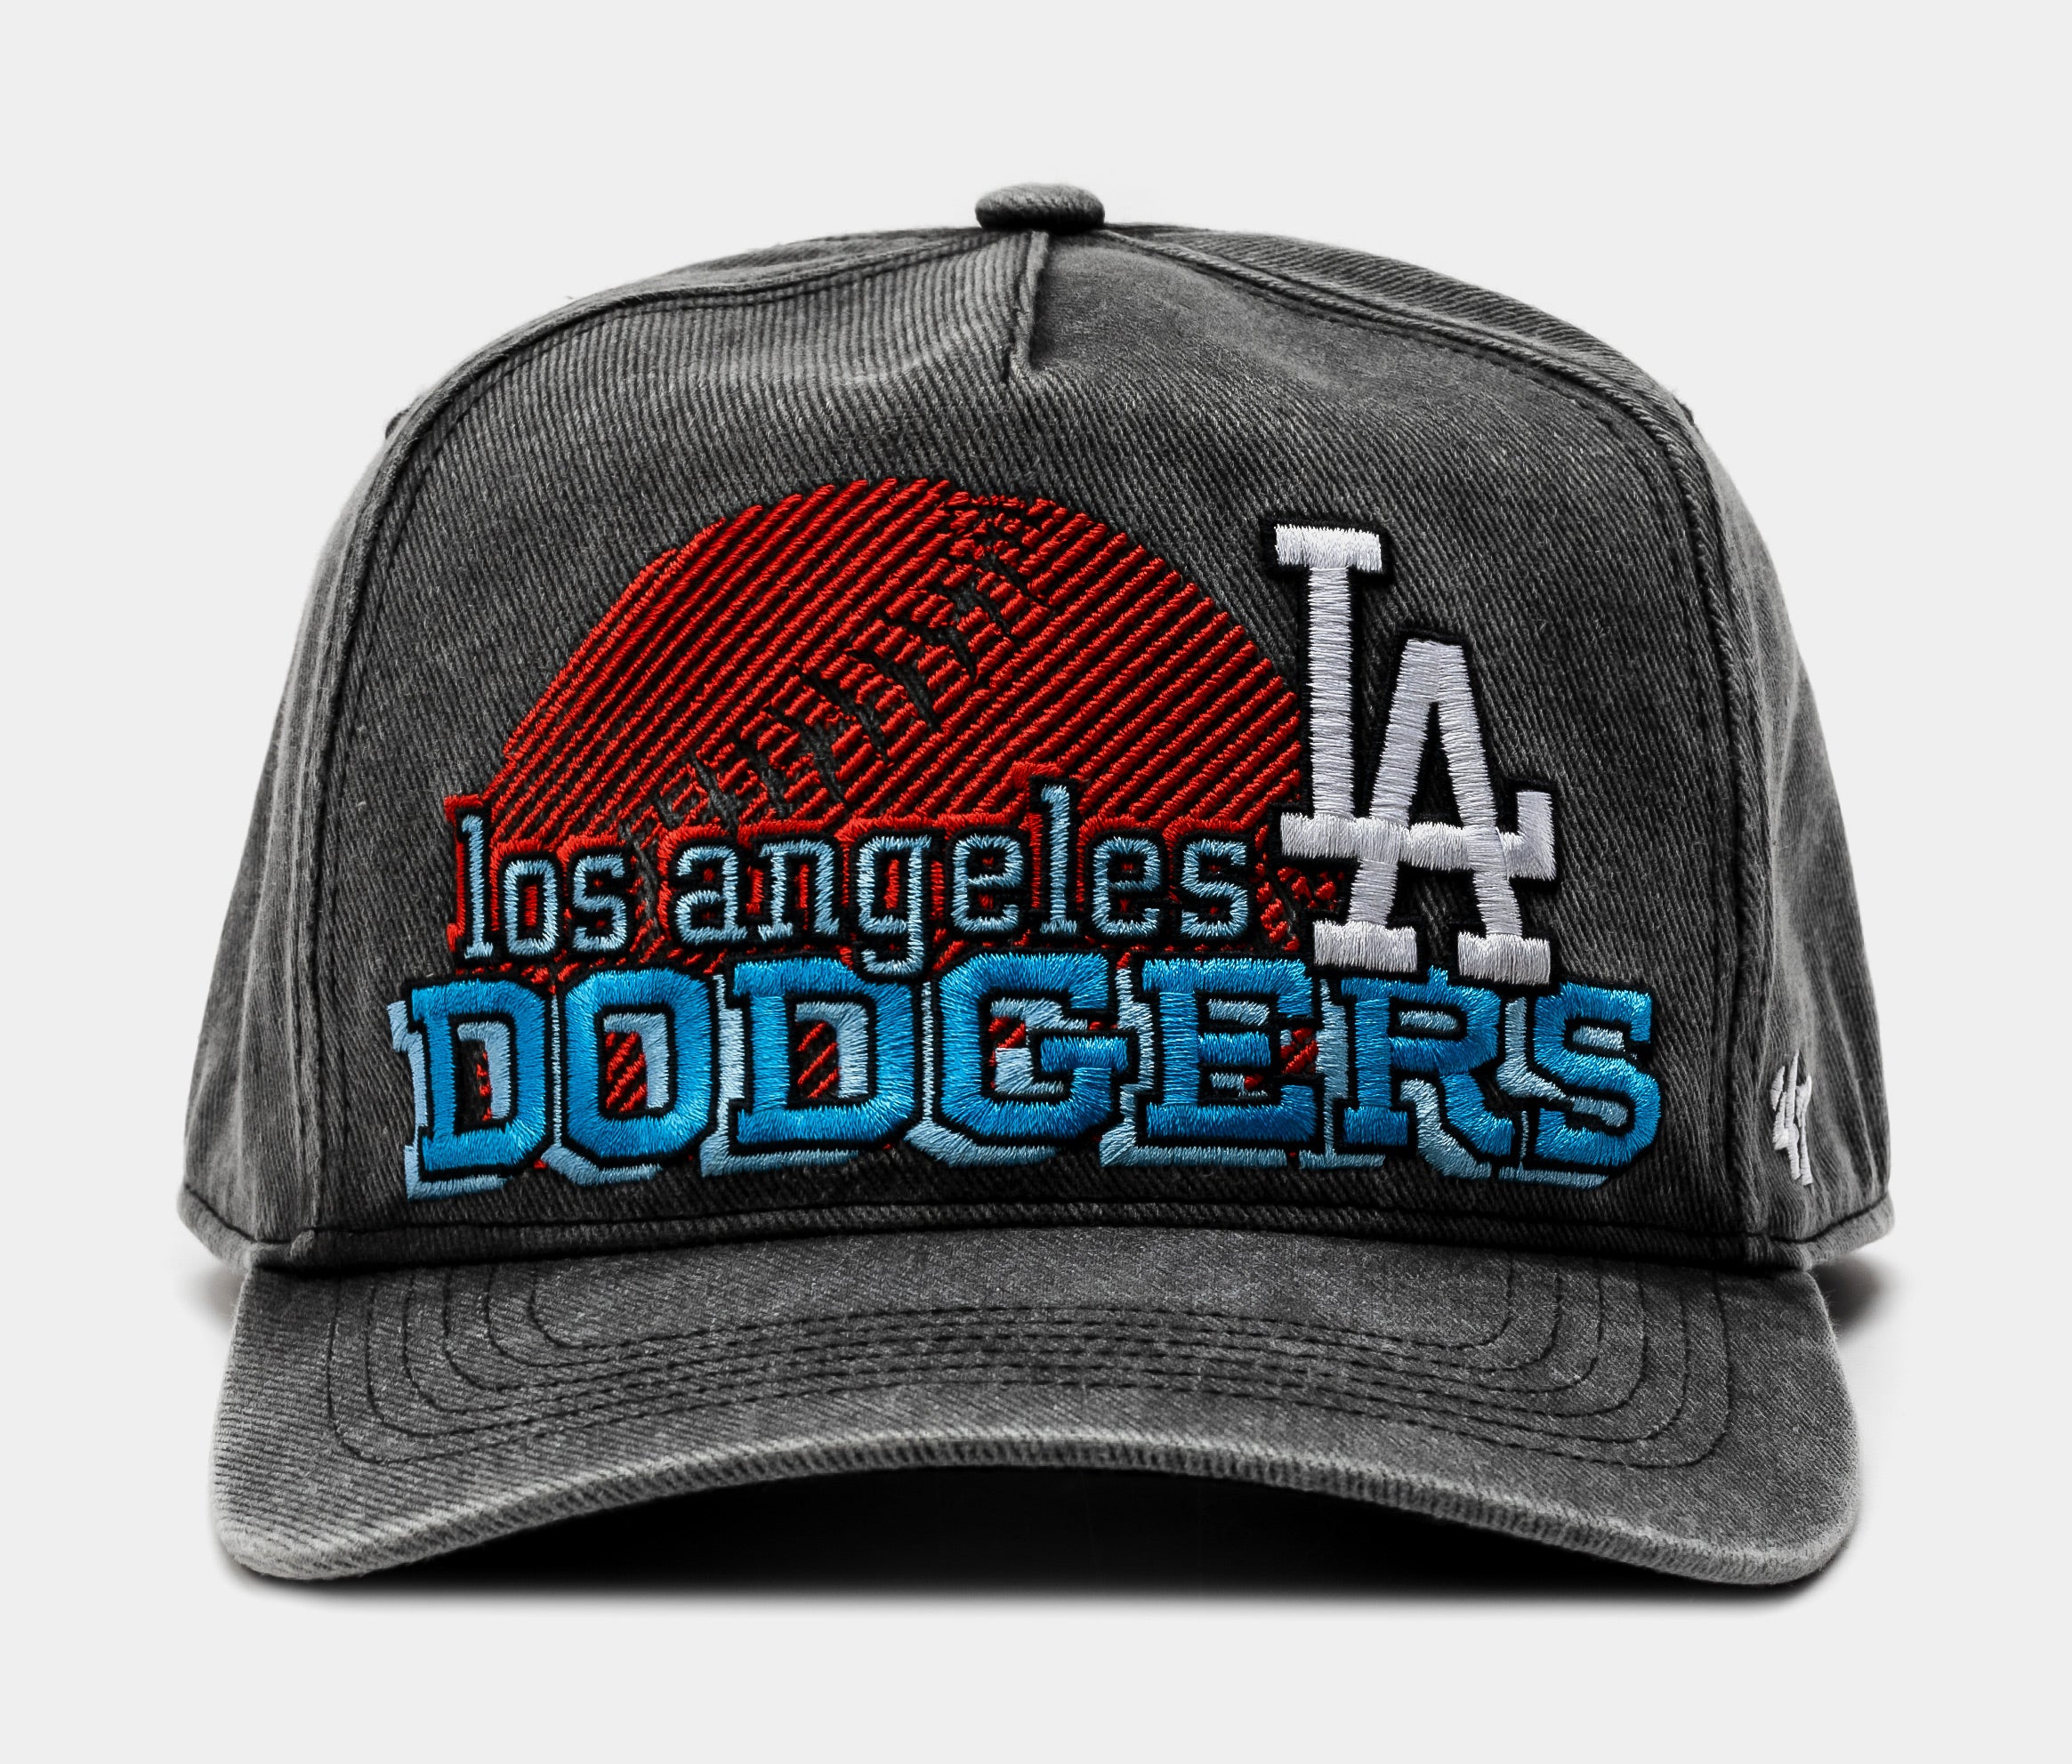 New era MLB Metallic Graphic Los Angeles Dodgers Short Sleeve T-Shirt